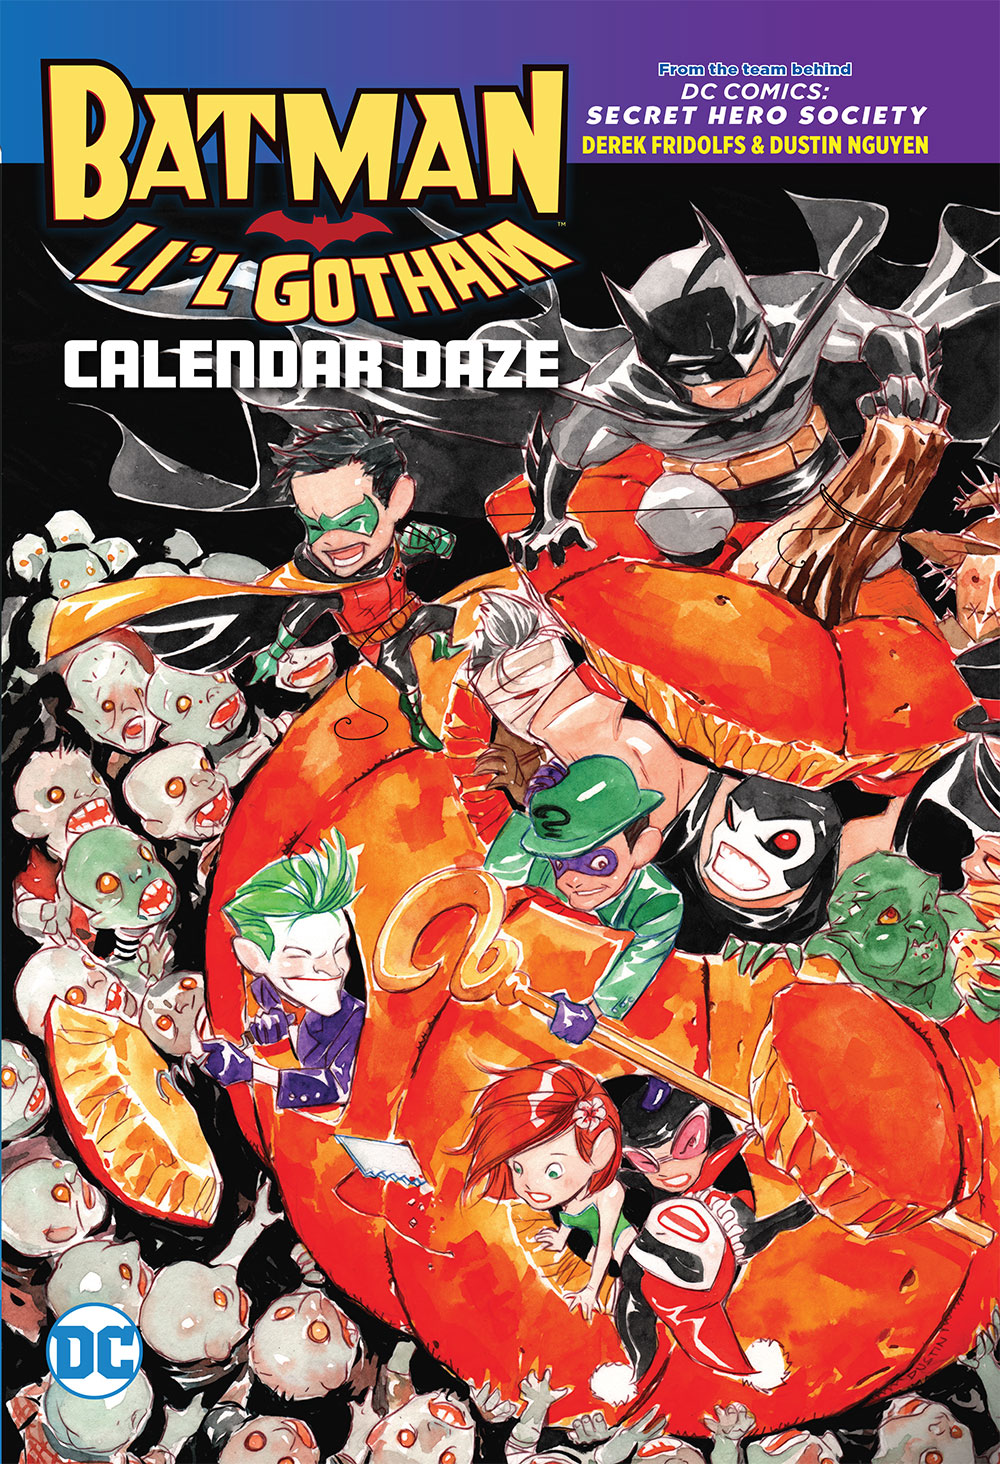 Batman Lil Gotham Calendar Daze Graphic Novel